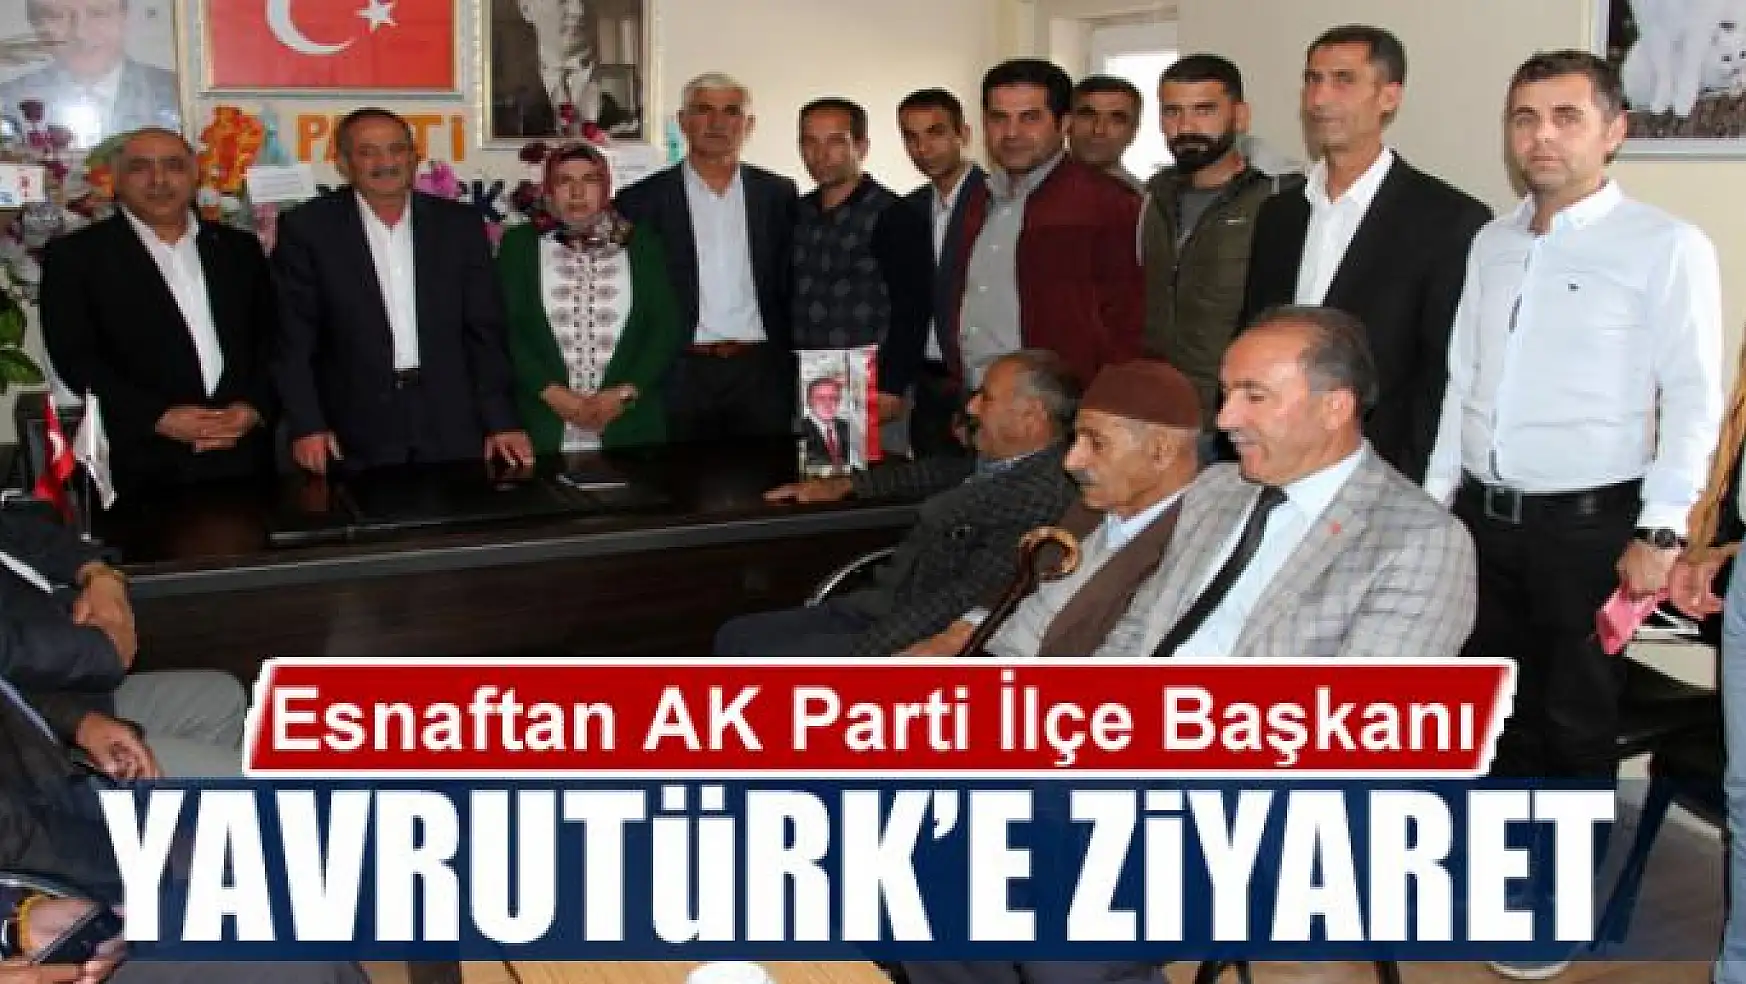 Esnaftan AK Parti İlçe Başkanı Yavrutürk'e ziyaret